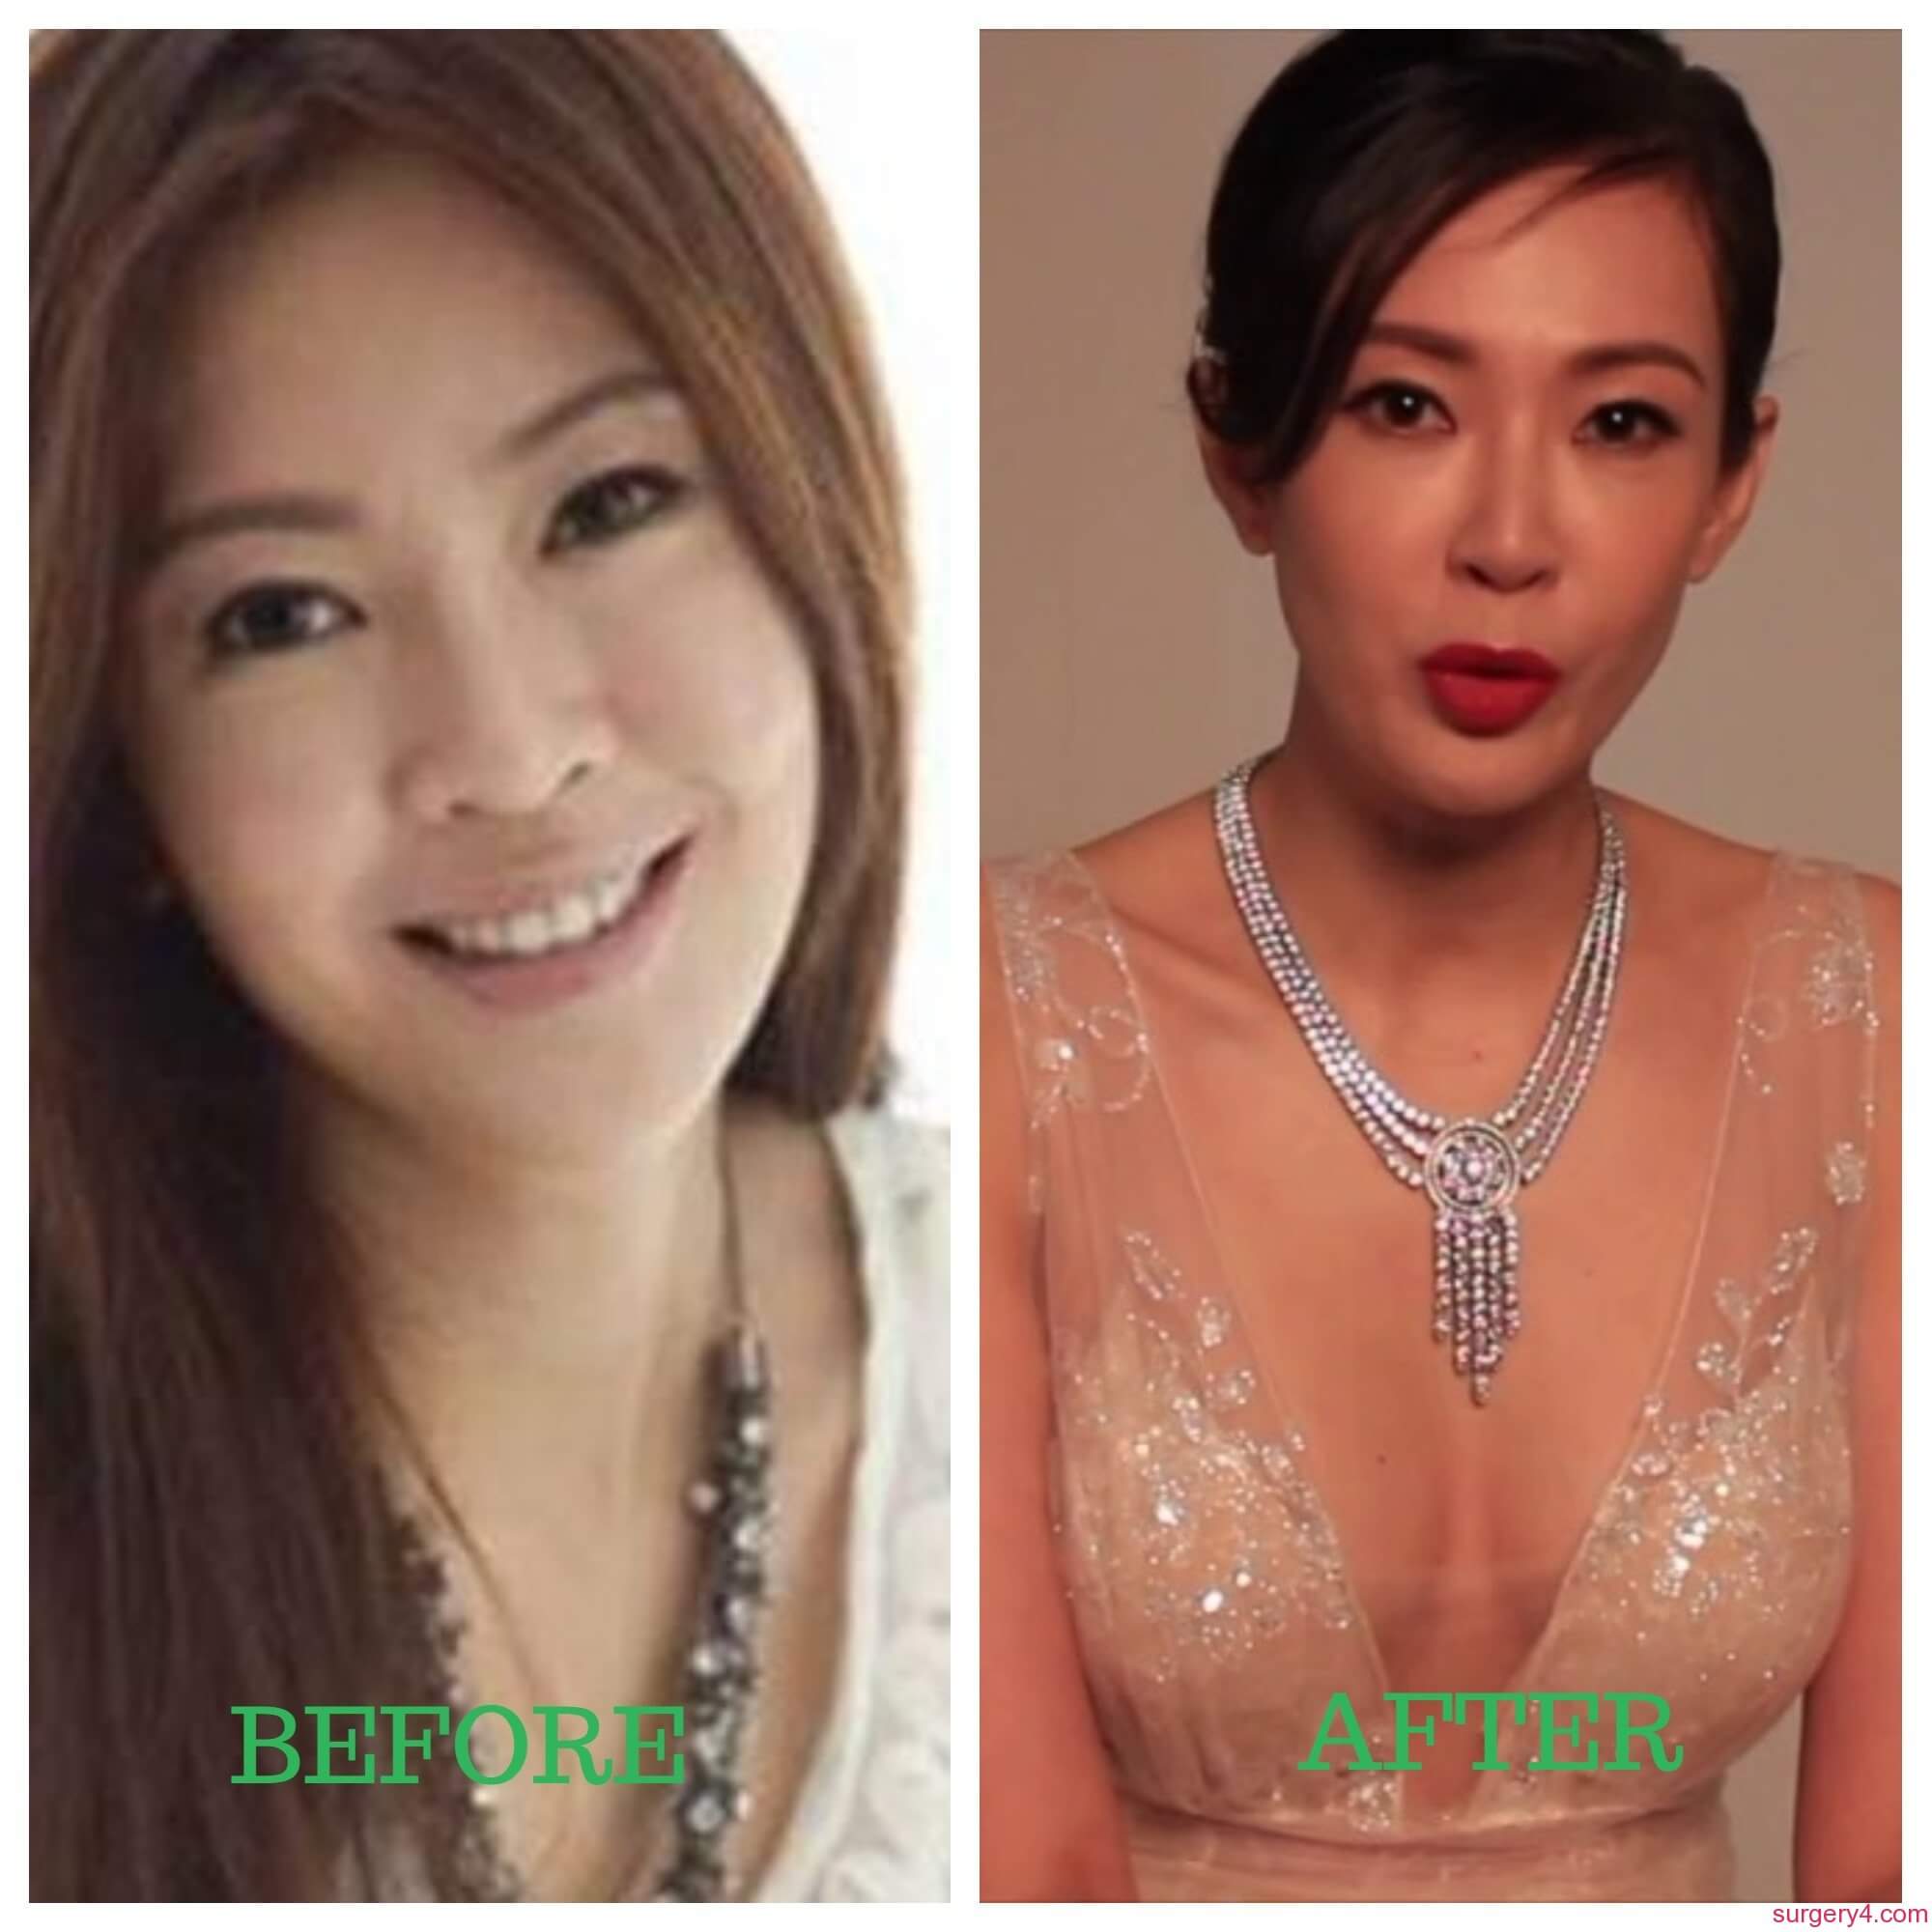 Jessica Liu Plastic Surgery Photos [Before & After] ⋆ Surgery4